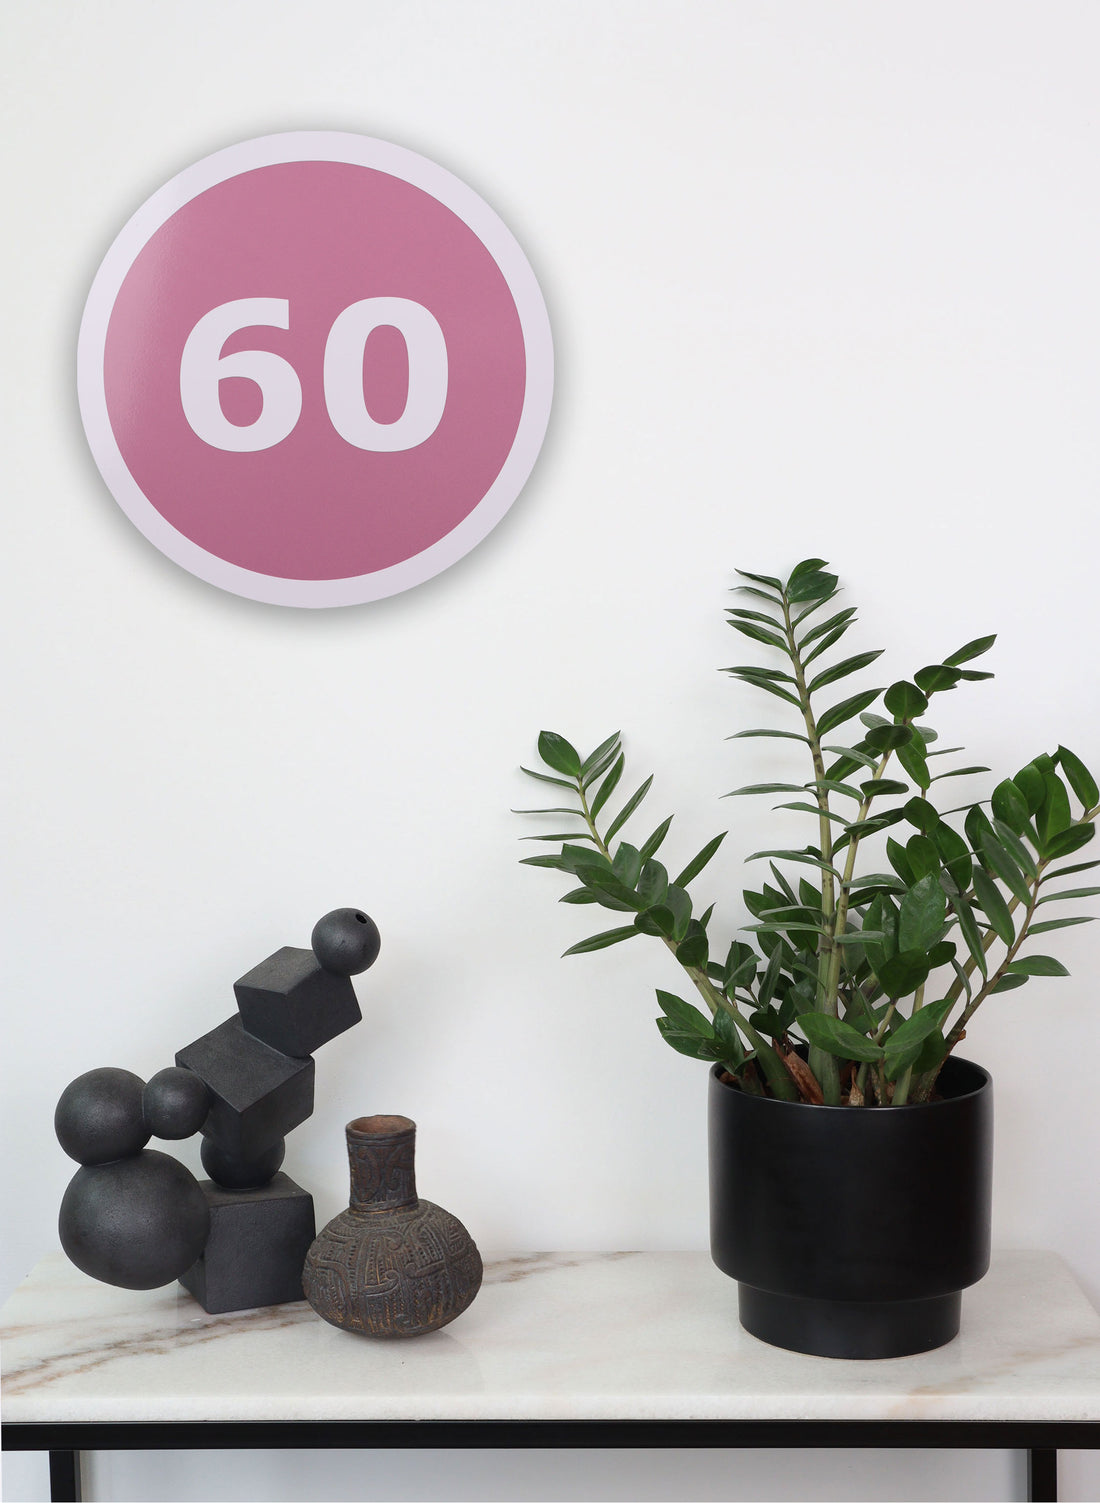 60 Round Medium Pink Sign